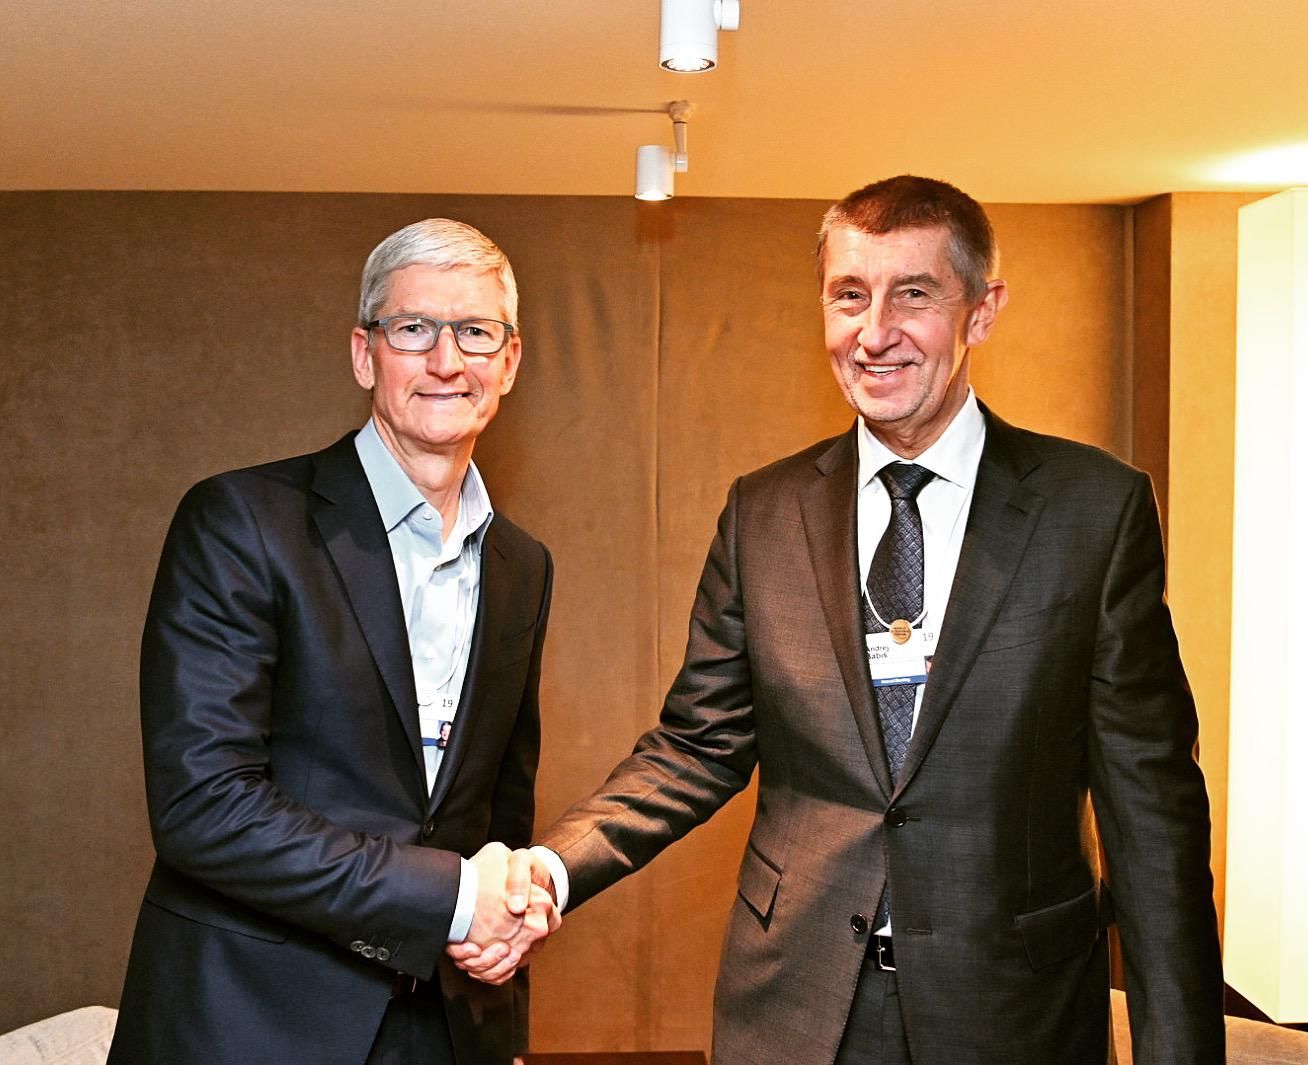 Praha dostane vlastní Apple Store. Tim Cook to slíbil Andreji Babišovi